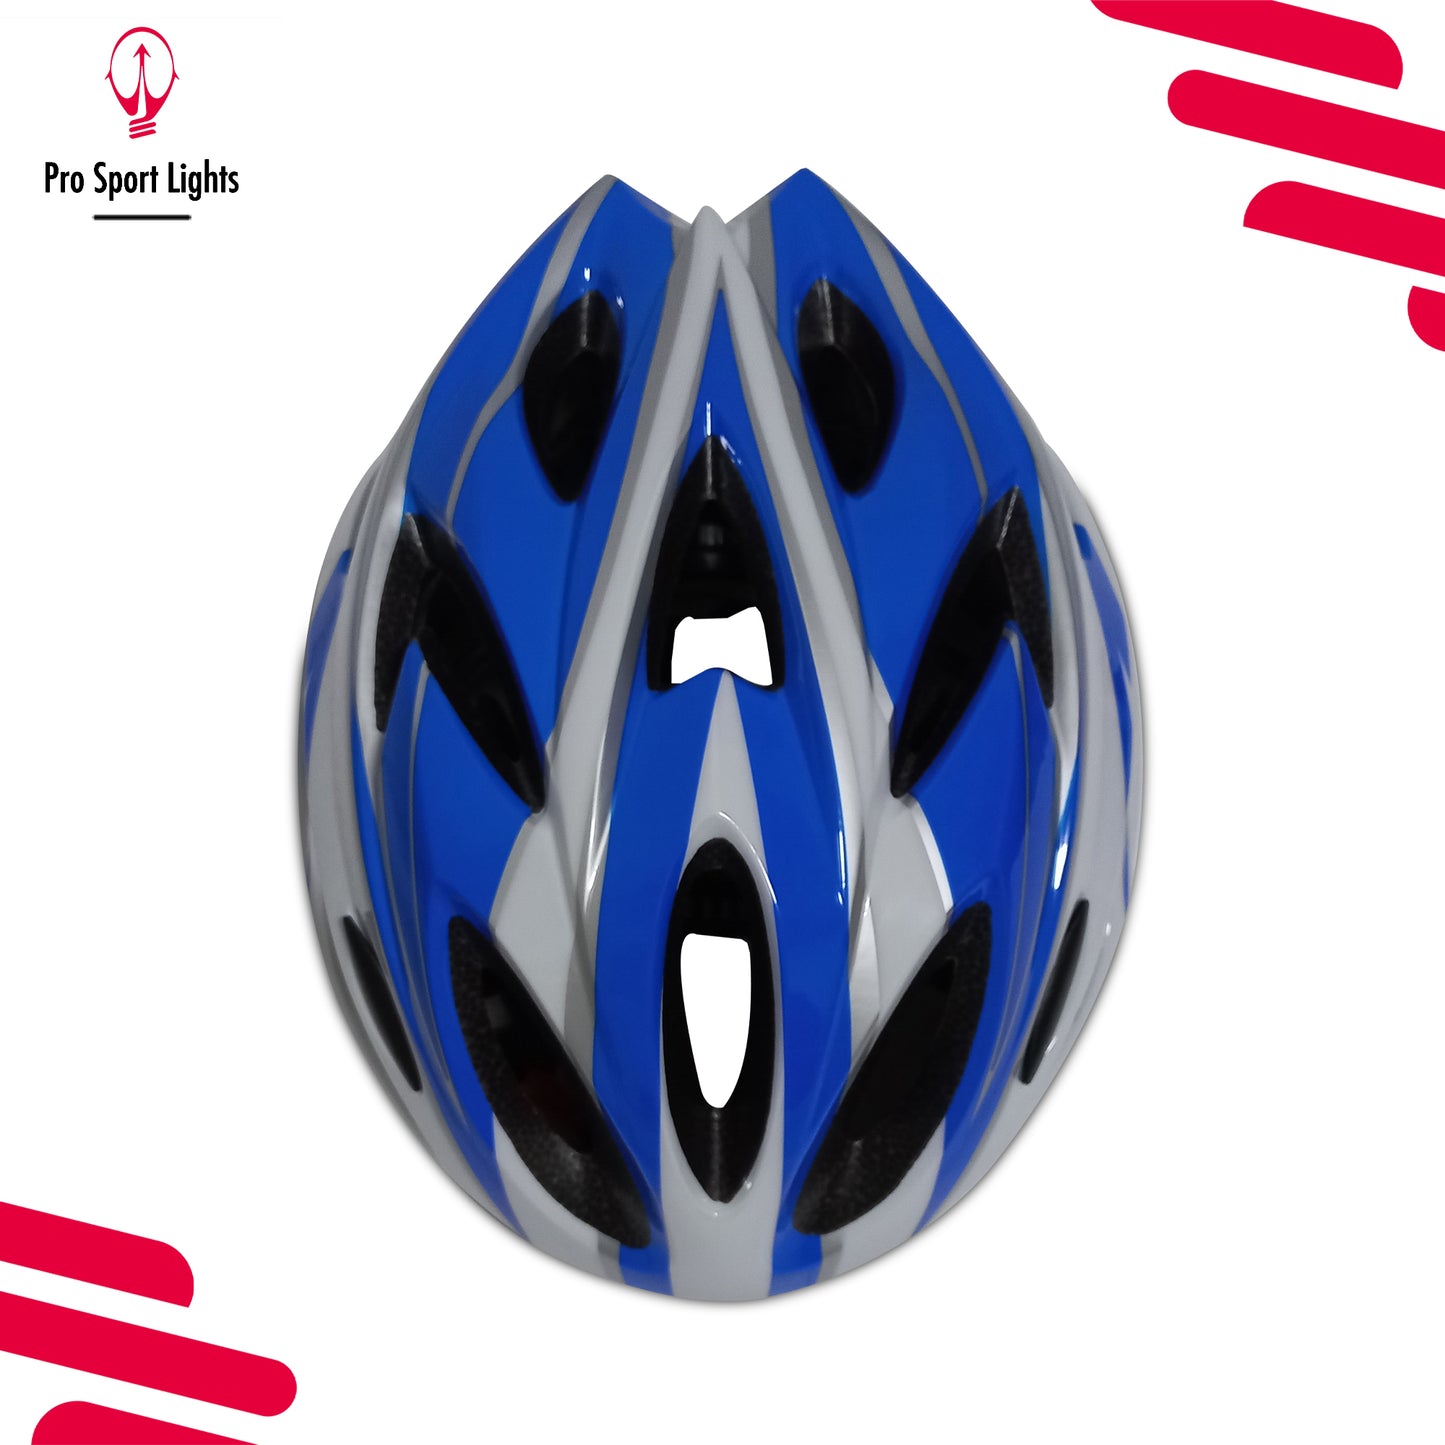 Cycling helmet Pro Sport Lights Women/Men White/Blue - Medium/Large